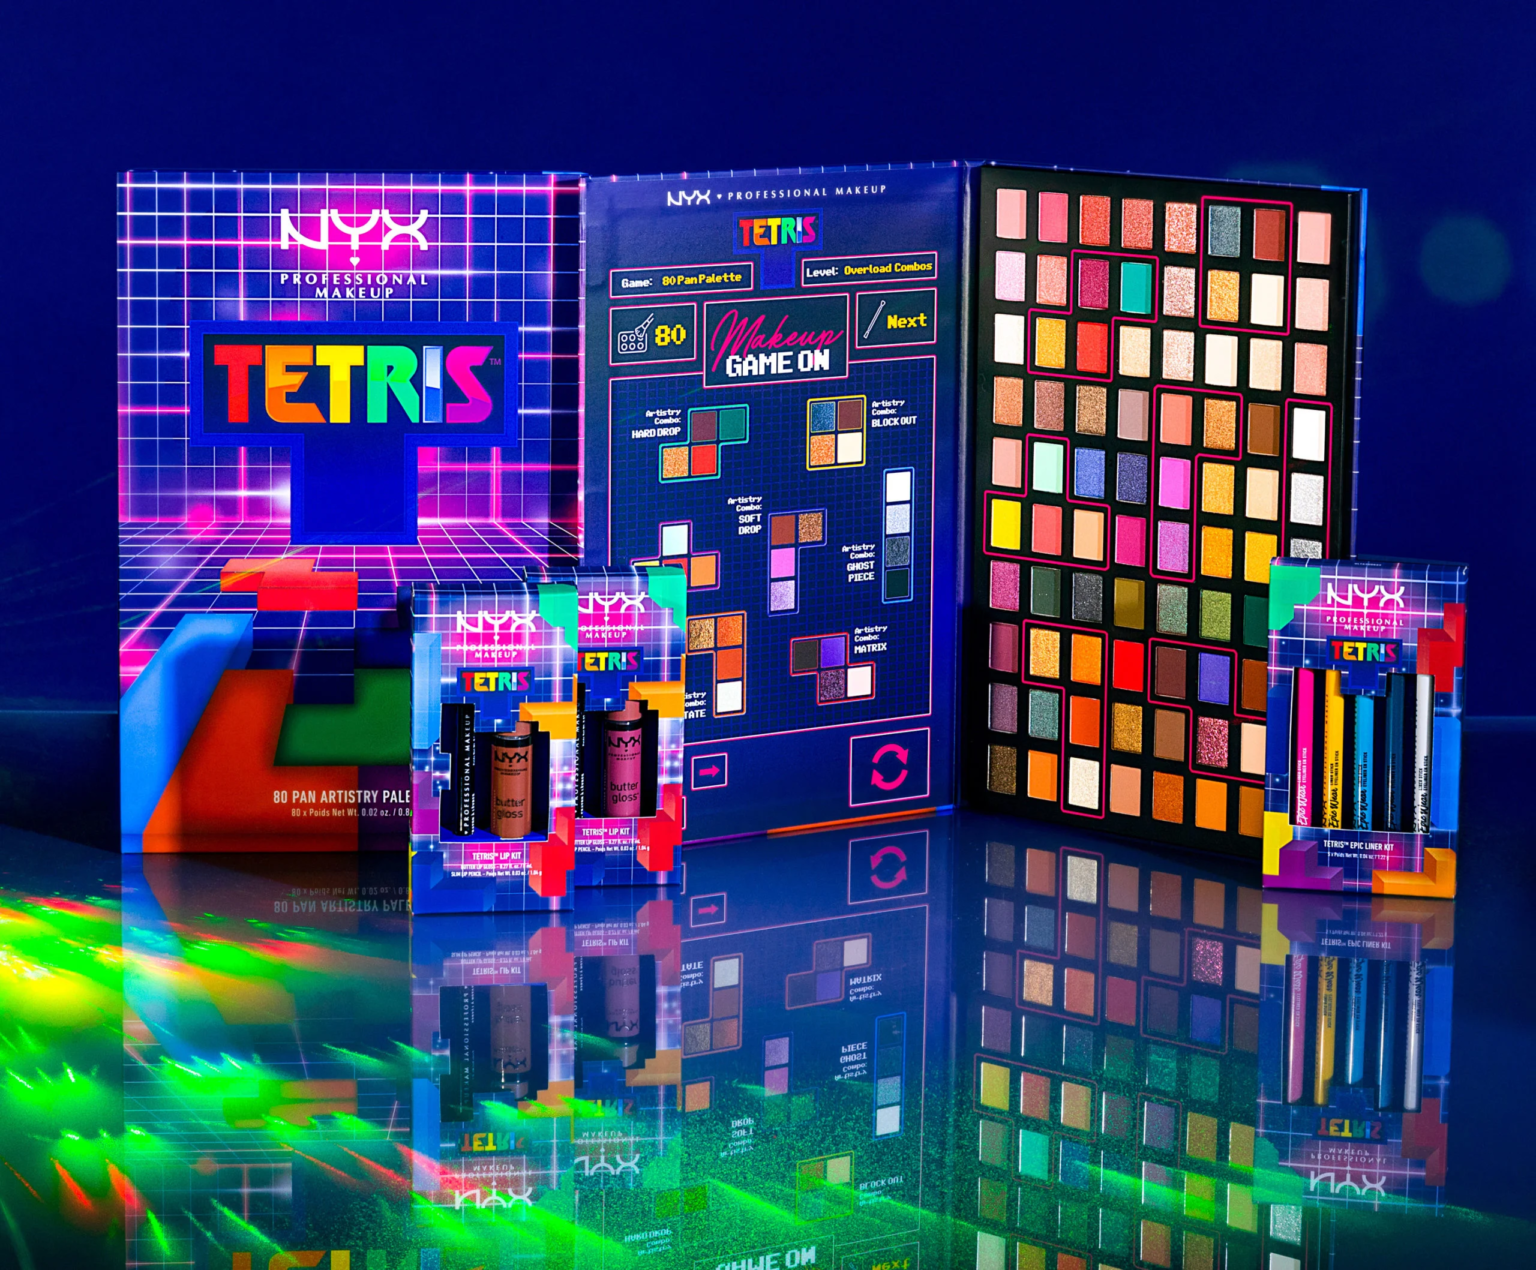 the Tetris makeup from NYX